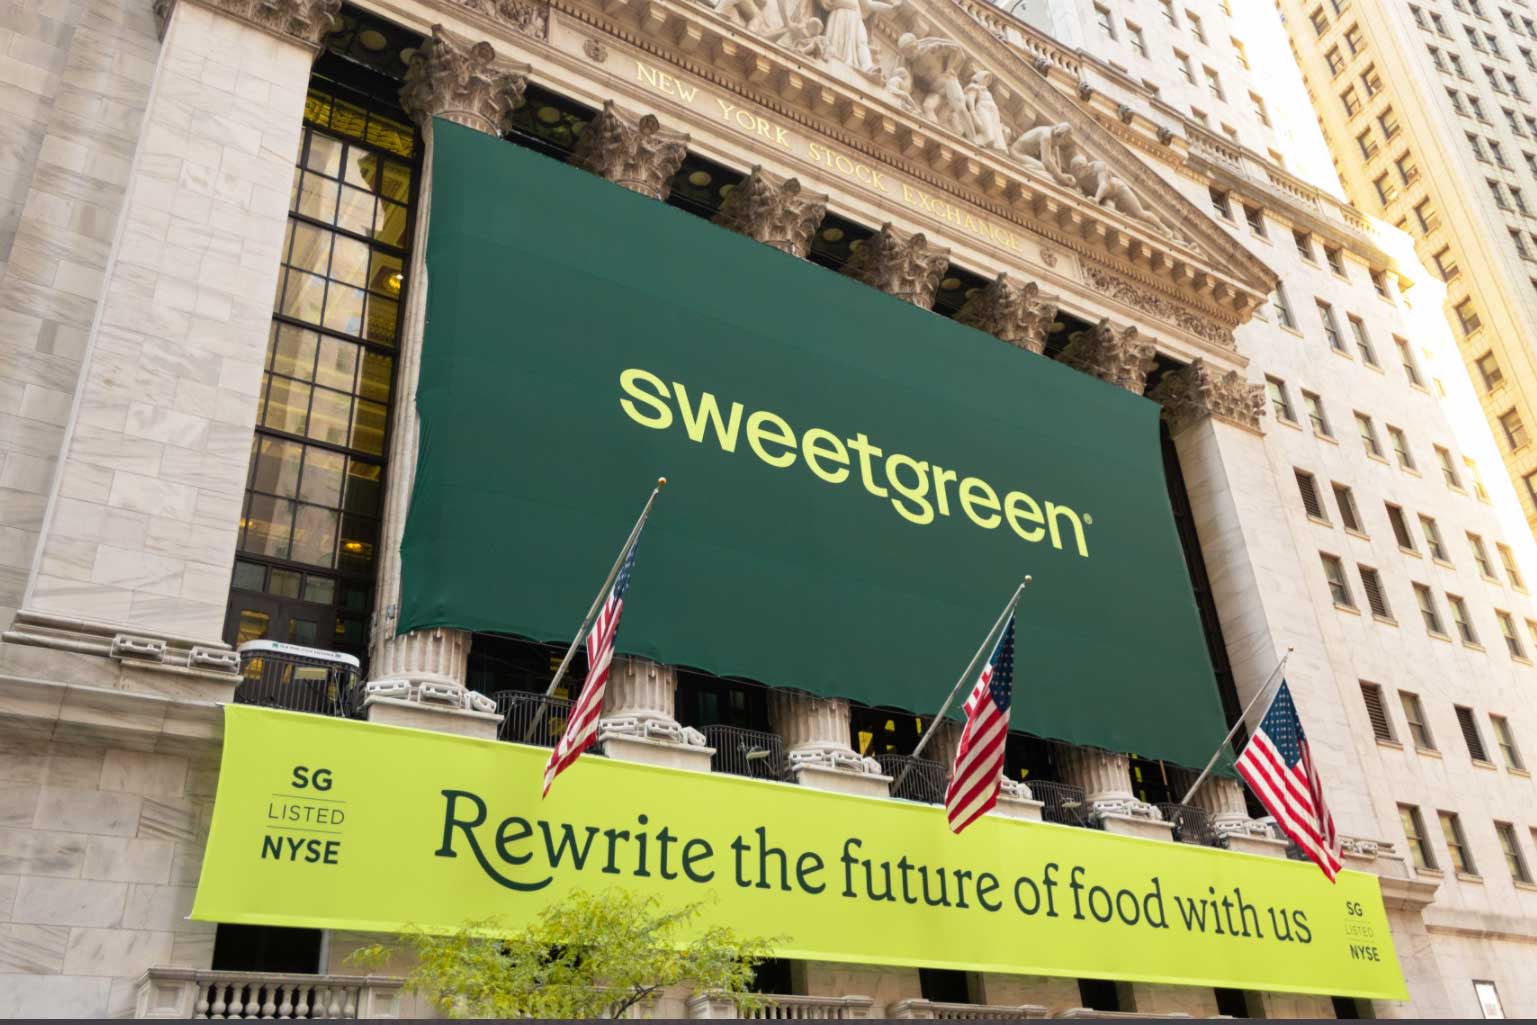 Sweetgreen (SG) Q4 2021 earnings